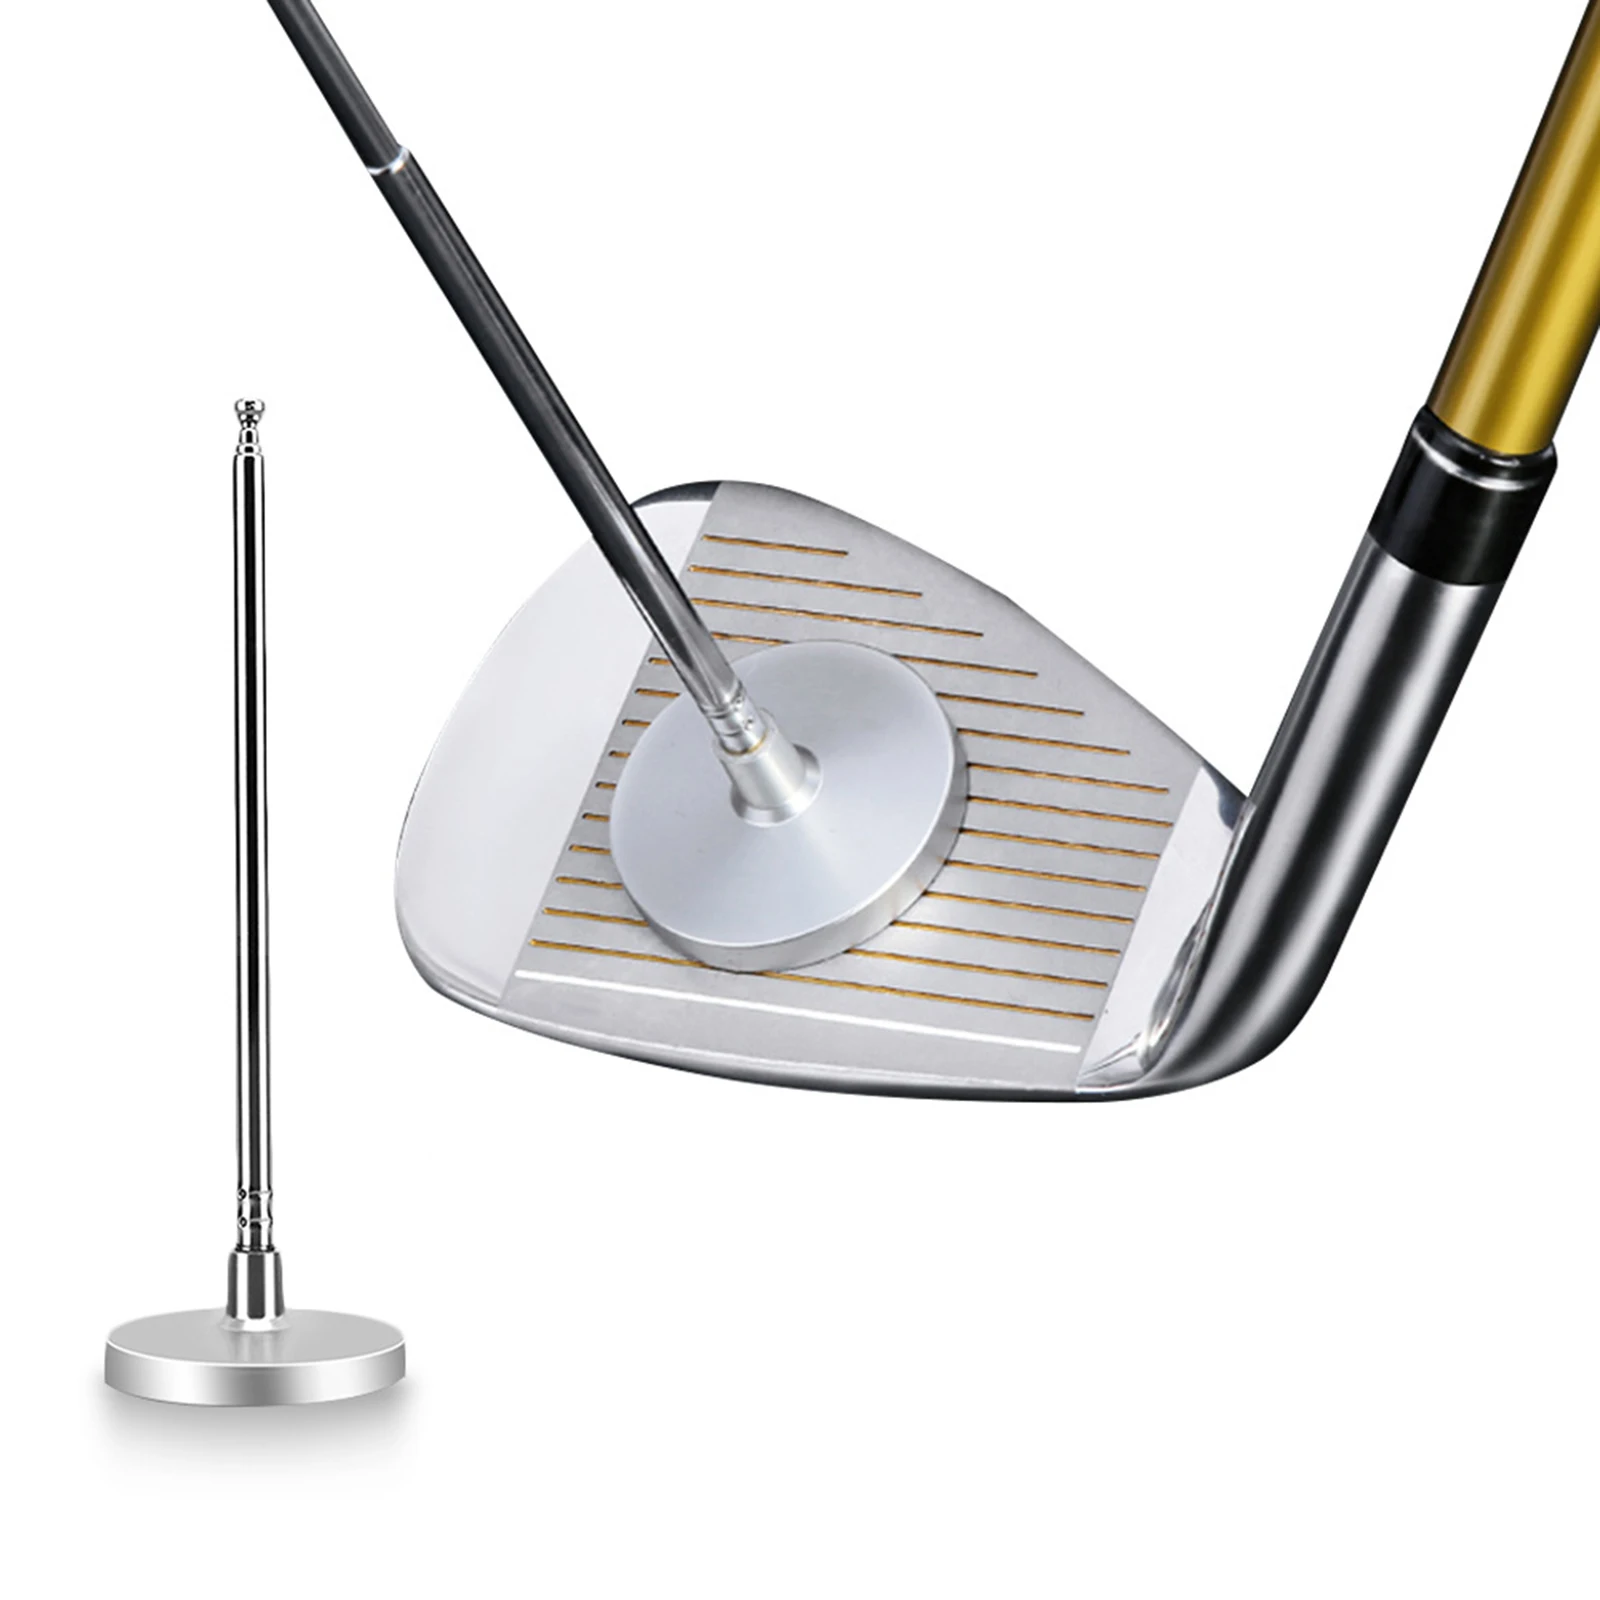 Aluminium Golf Direction Cutting Indicator Golf Training Aids Rod Cutting Exerciser Corrective Practice Exerciser Accessories